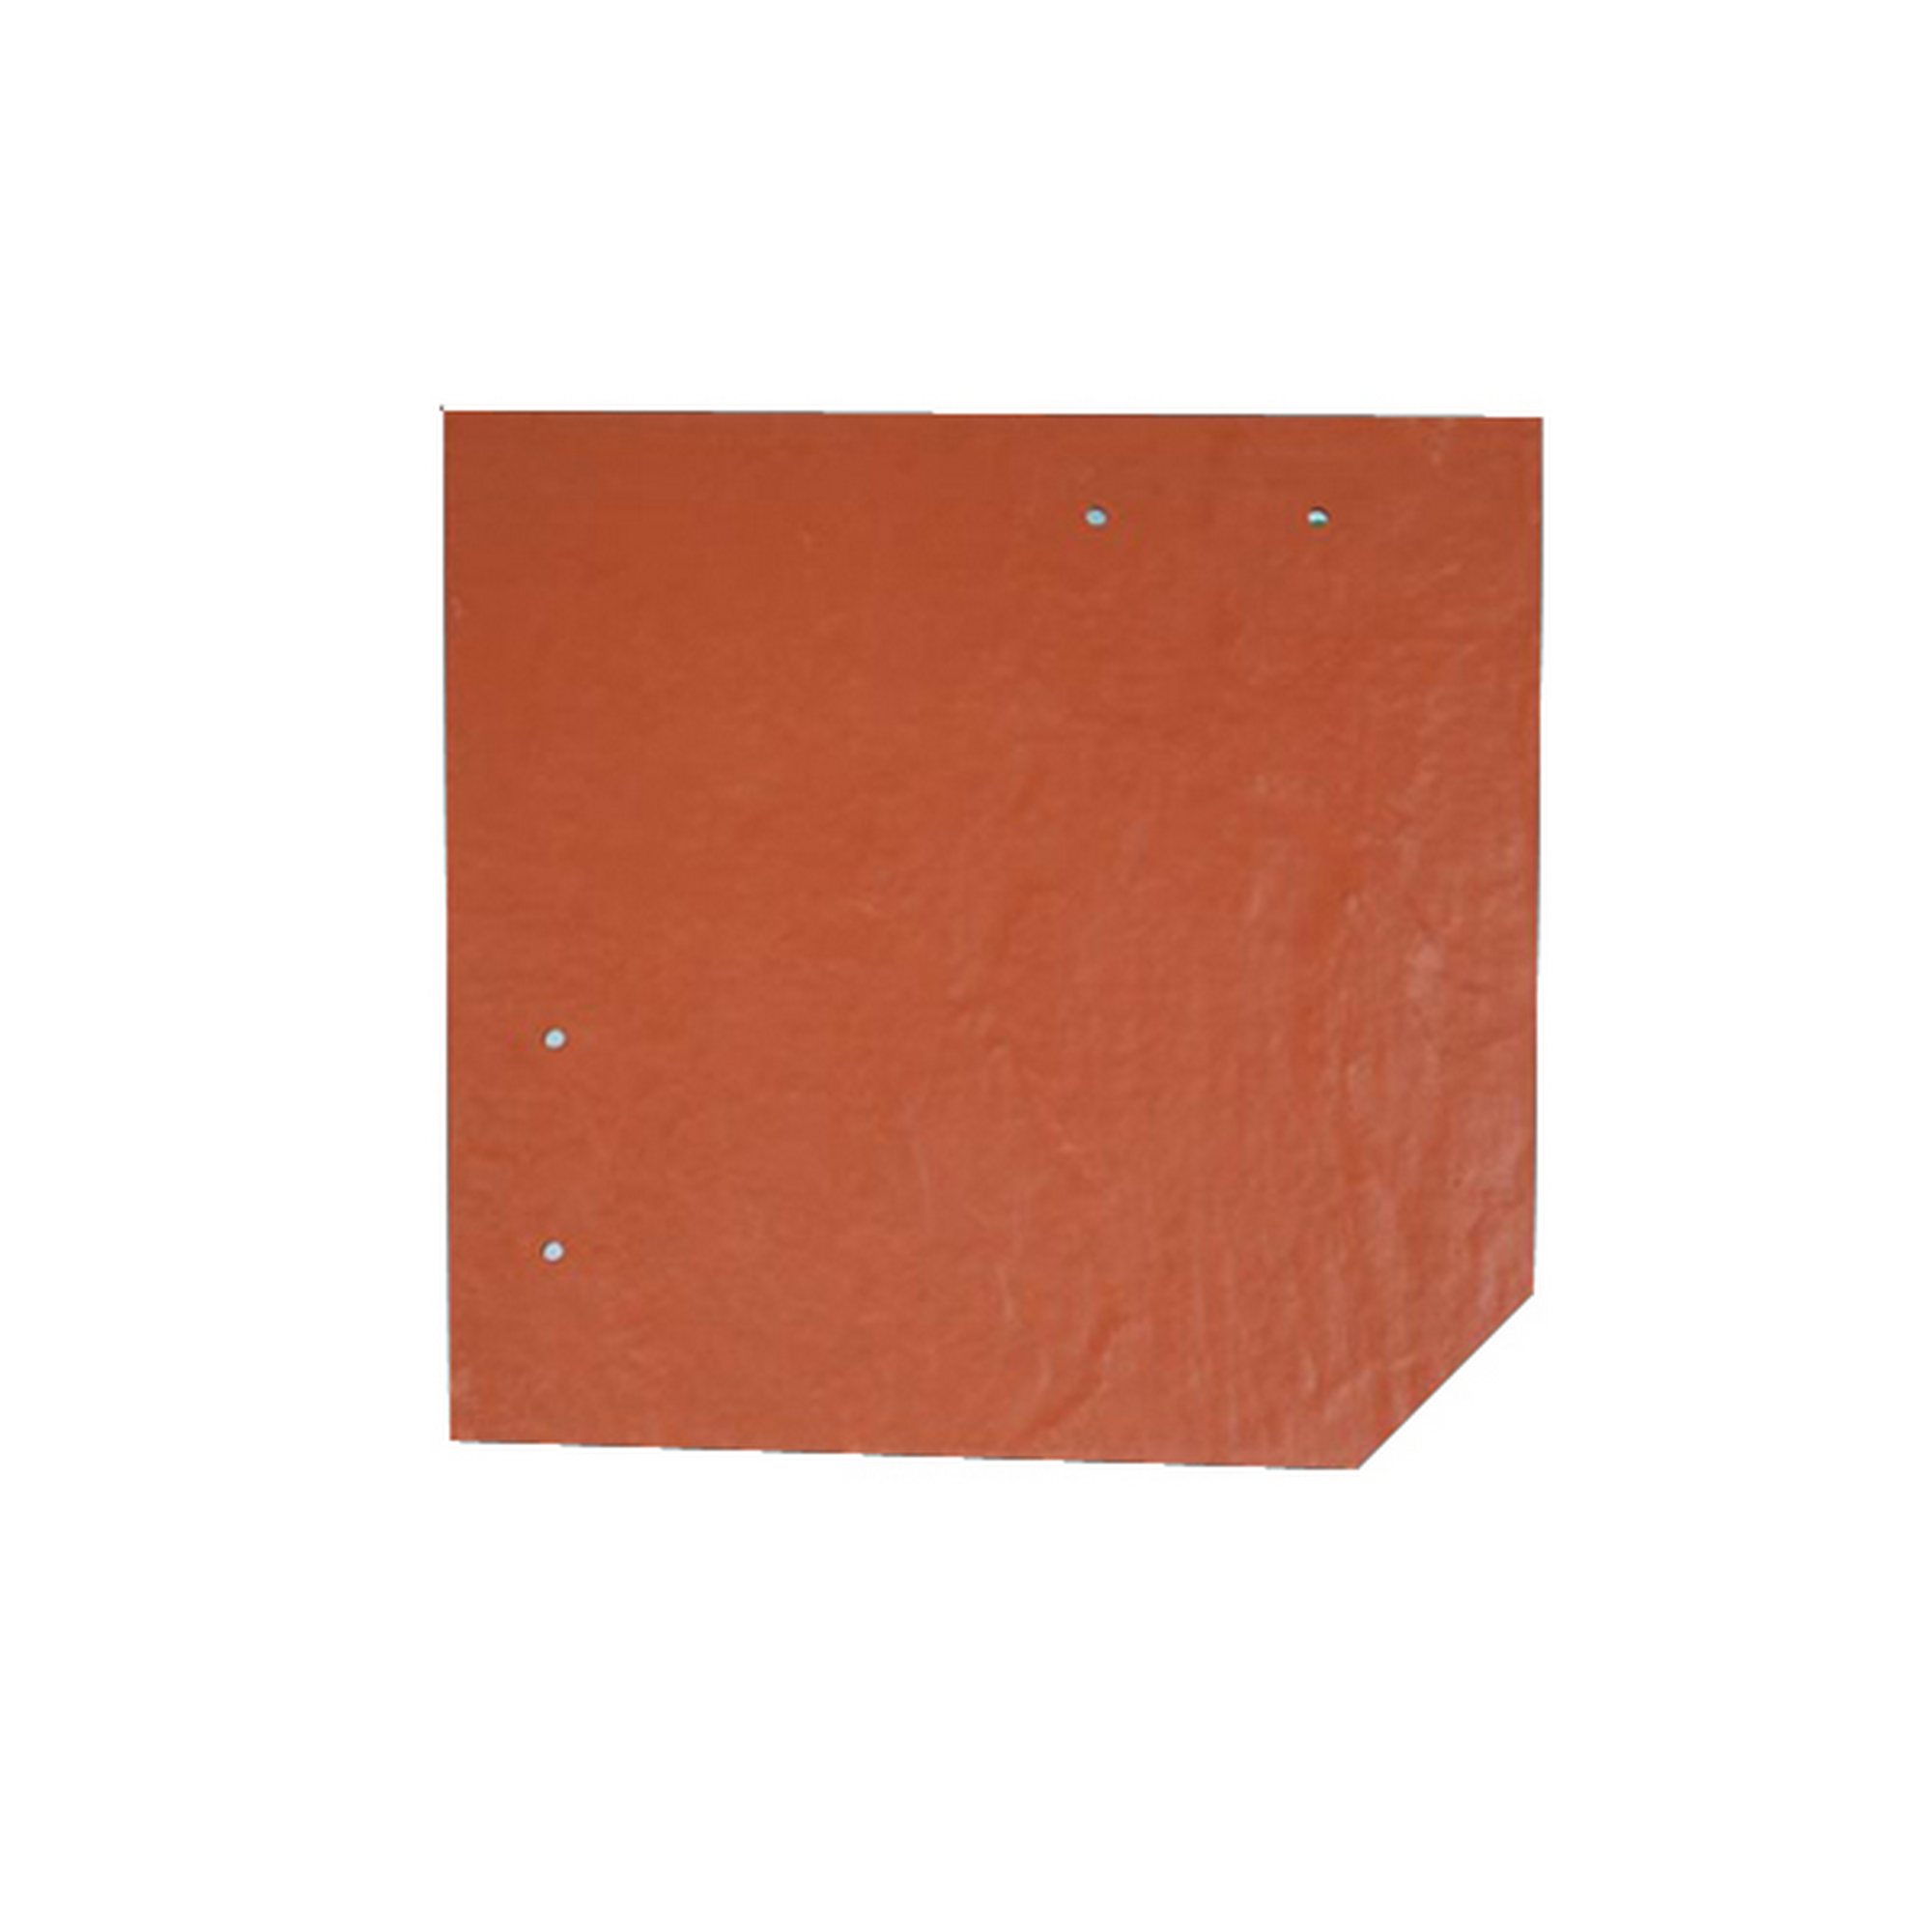 Carport 'Spreewald' rote Blende  345 x 589 cm imprägniert + product picture